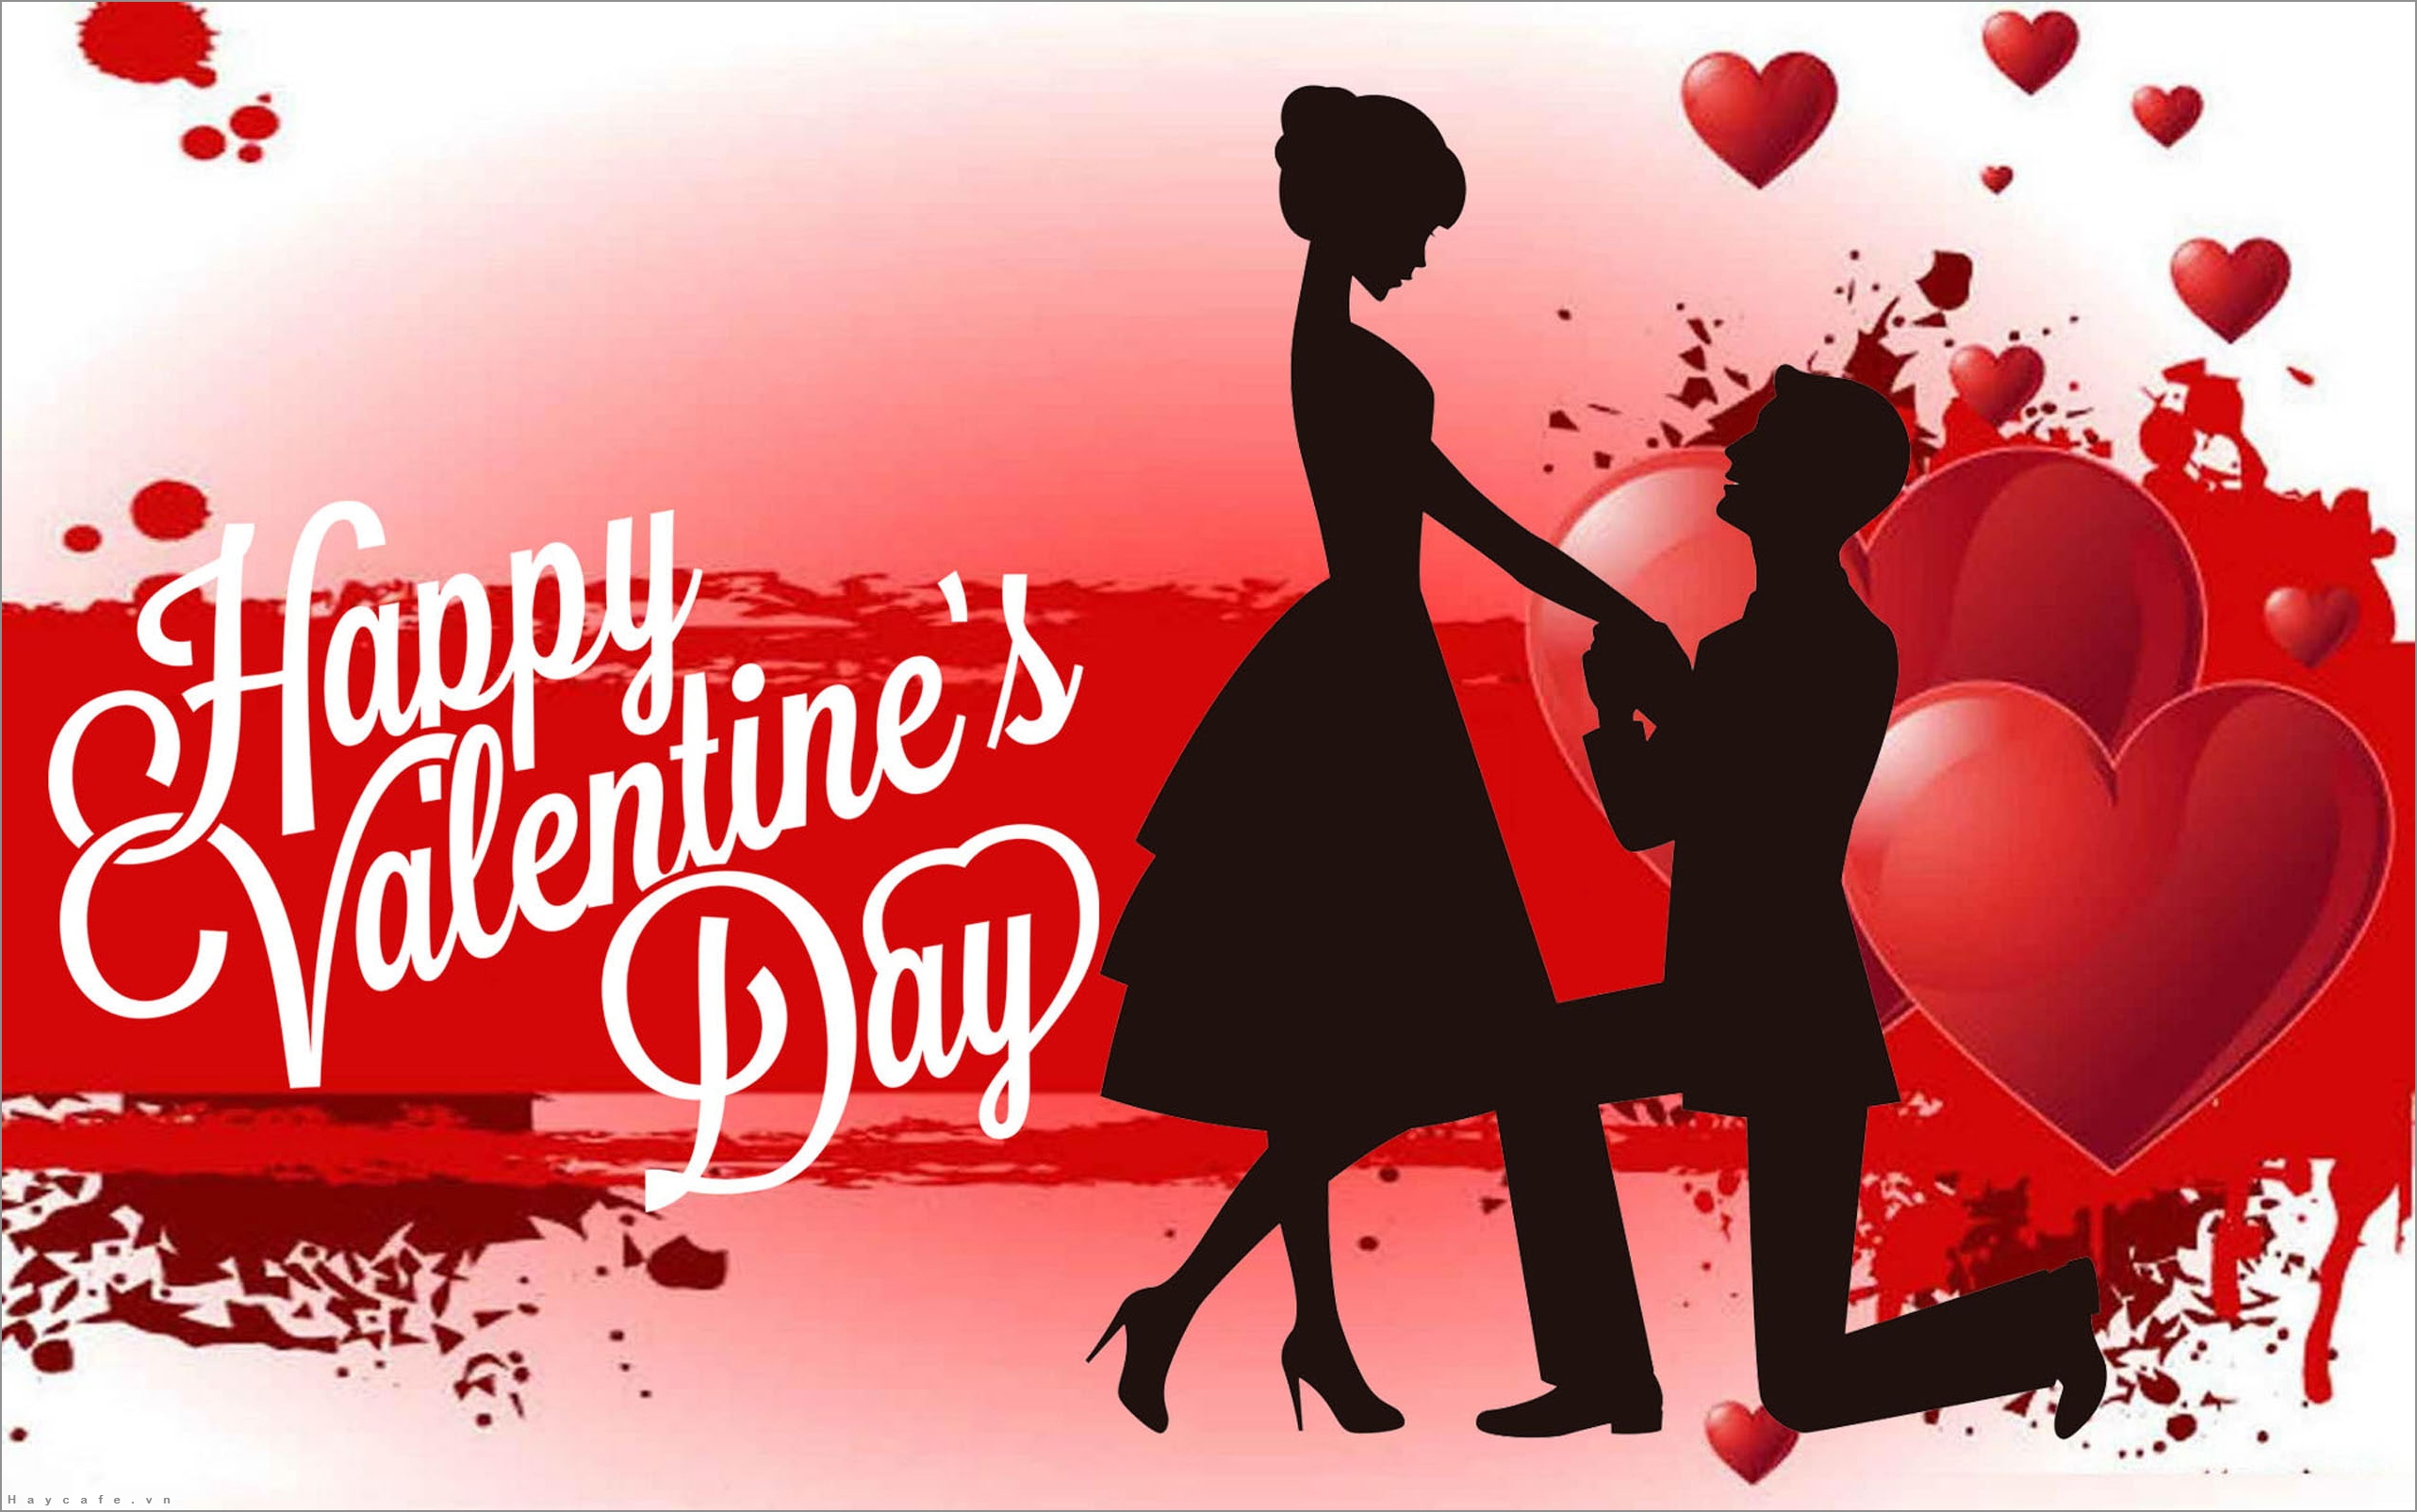 Have a valentine s day. 14 Февраля день влюбленных. 14 Февраля Happy Valentine Day. Счастливого дня влюбленных.